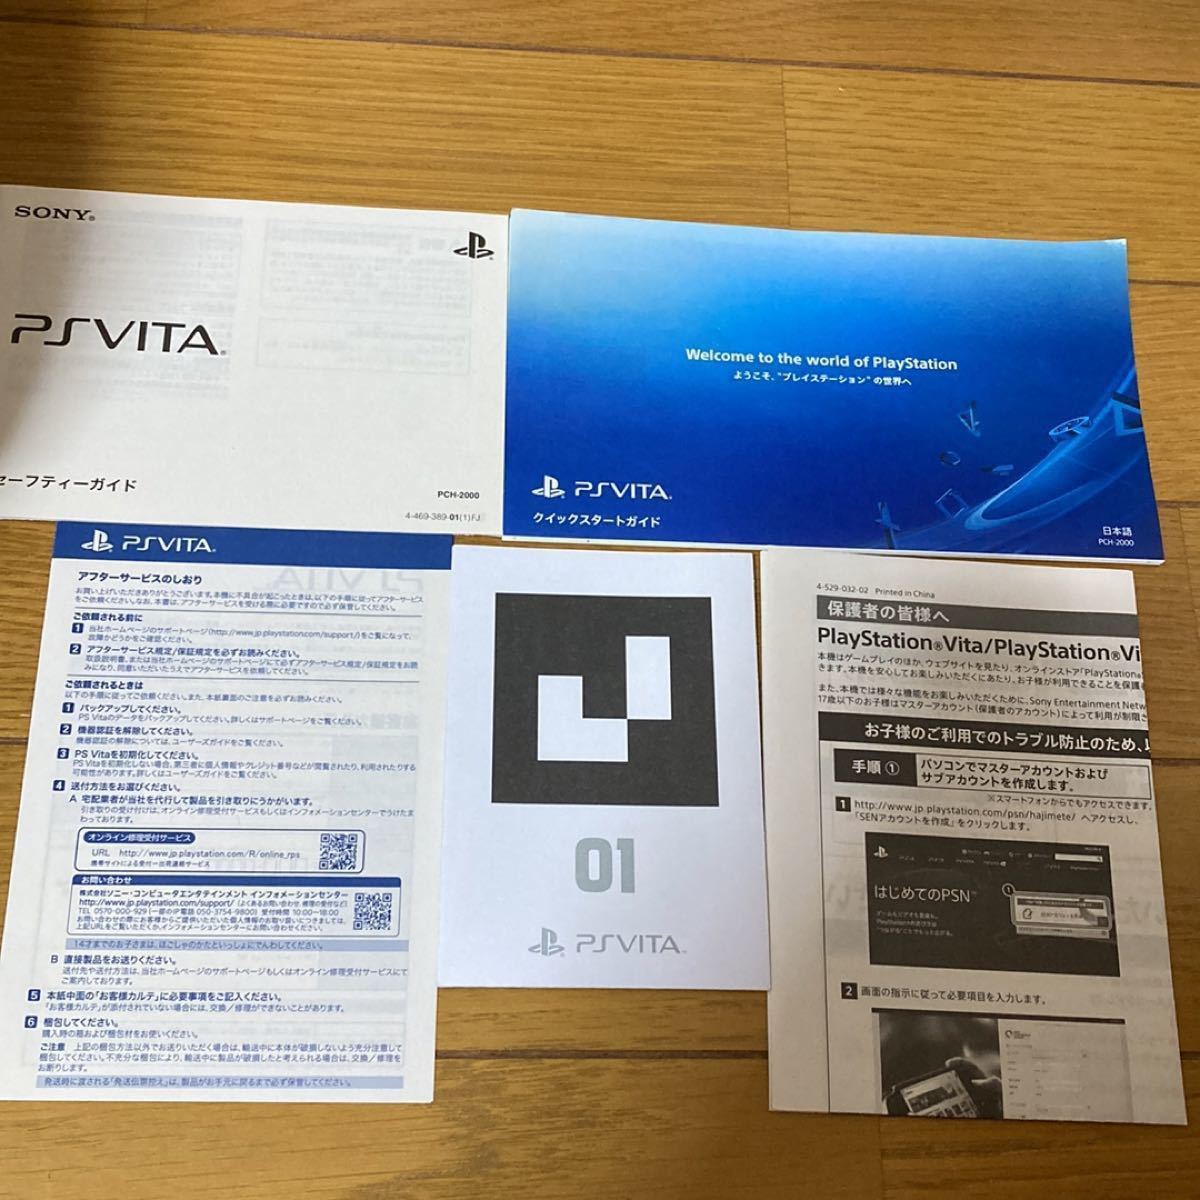 PlayStation Vita （PCH-2000シリーズ） Wi-Fiモデル ピンク/ブラック PCH-2000ZA15